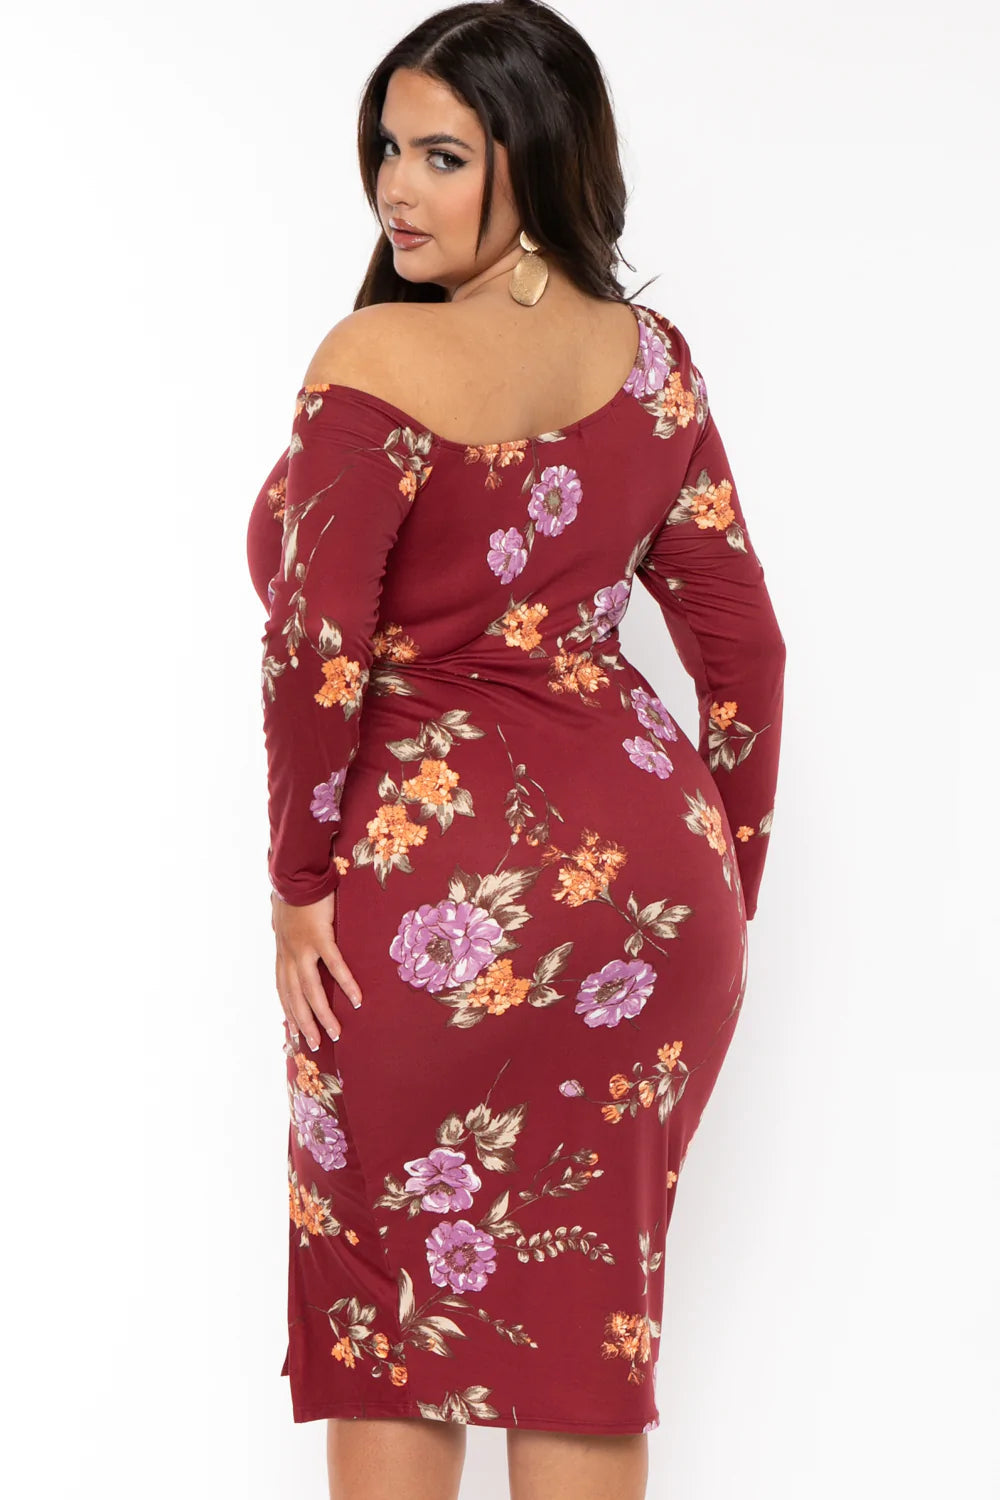 Curvy Sense Dresses Plus Size Floral Nadia One Shoulder Dress- Burgundy